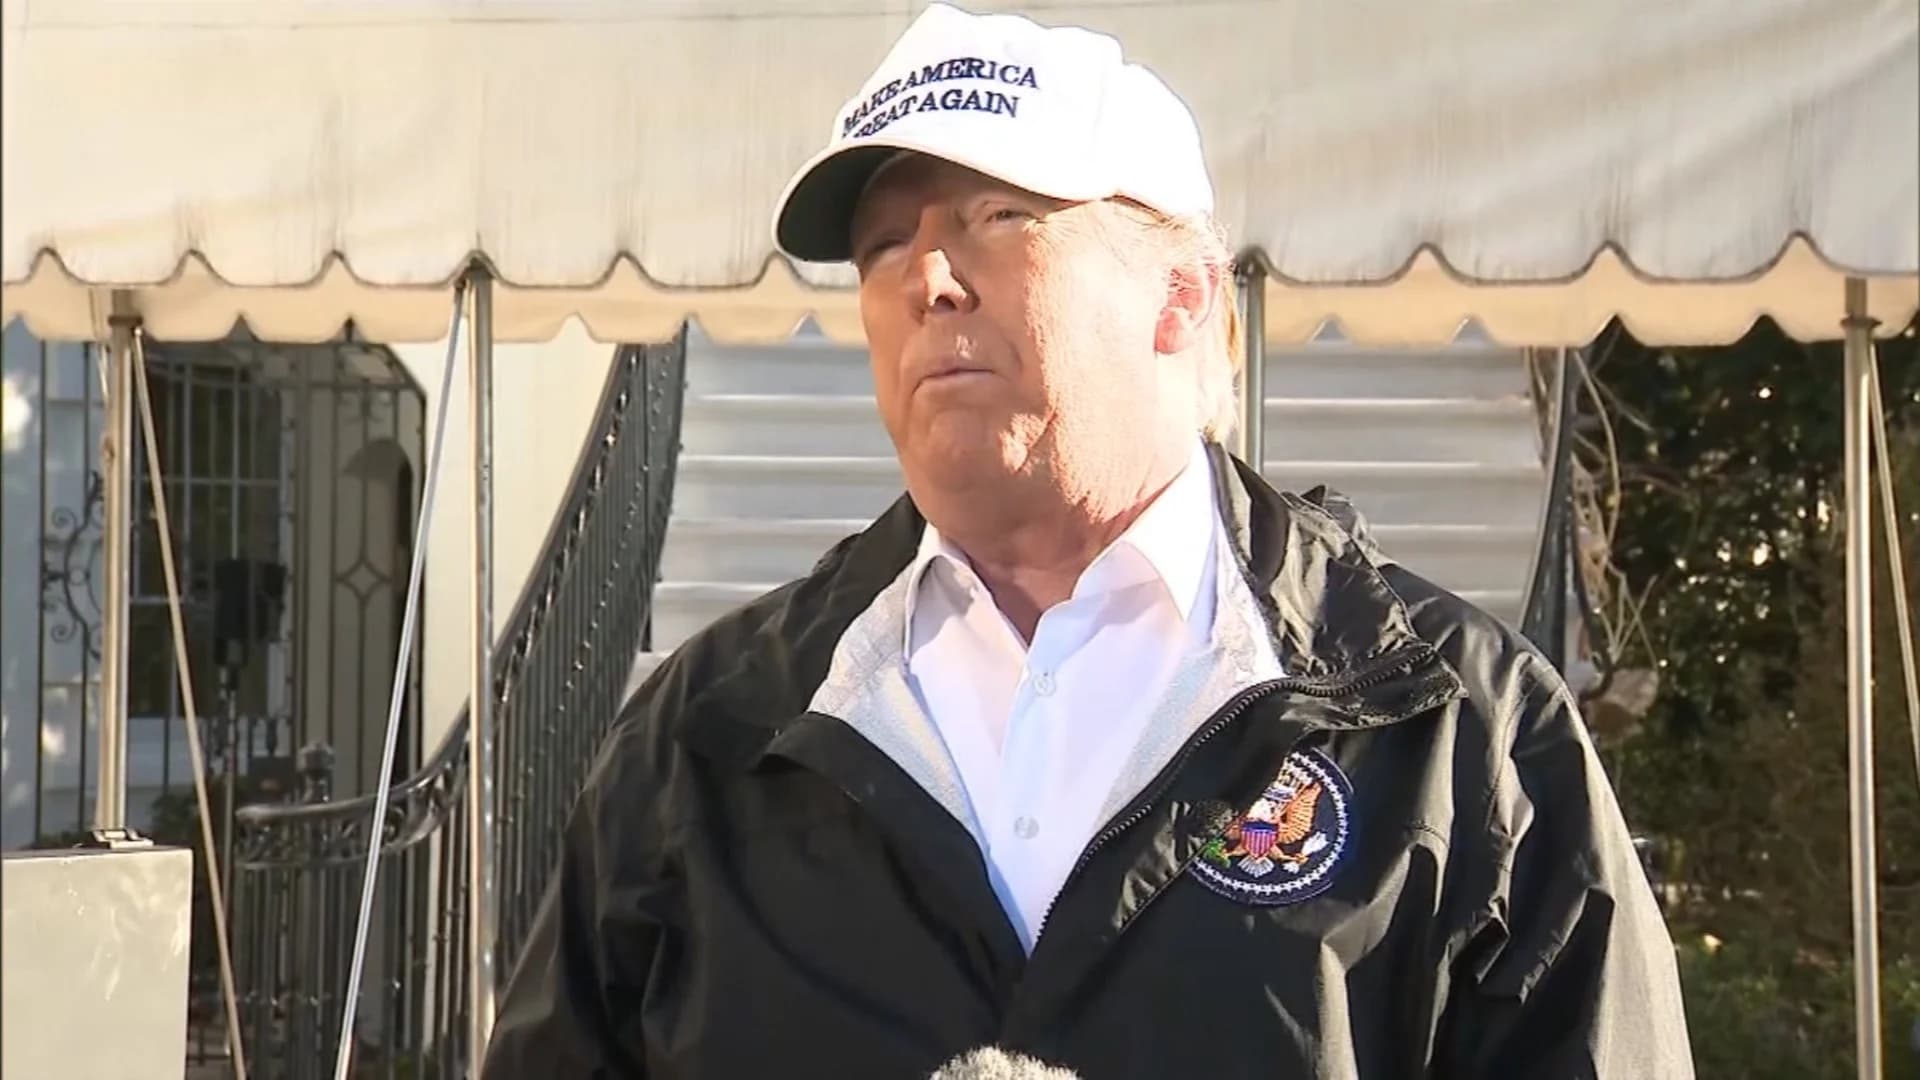 As President Trump visits border, Texas landowners prepare wall fight